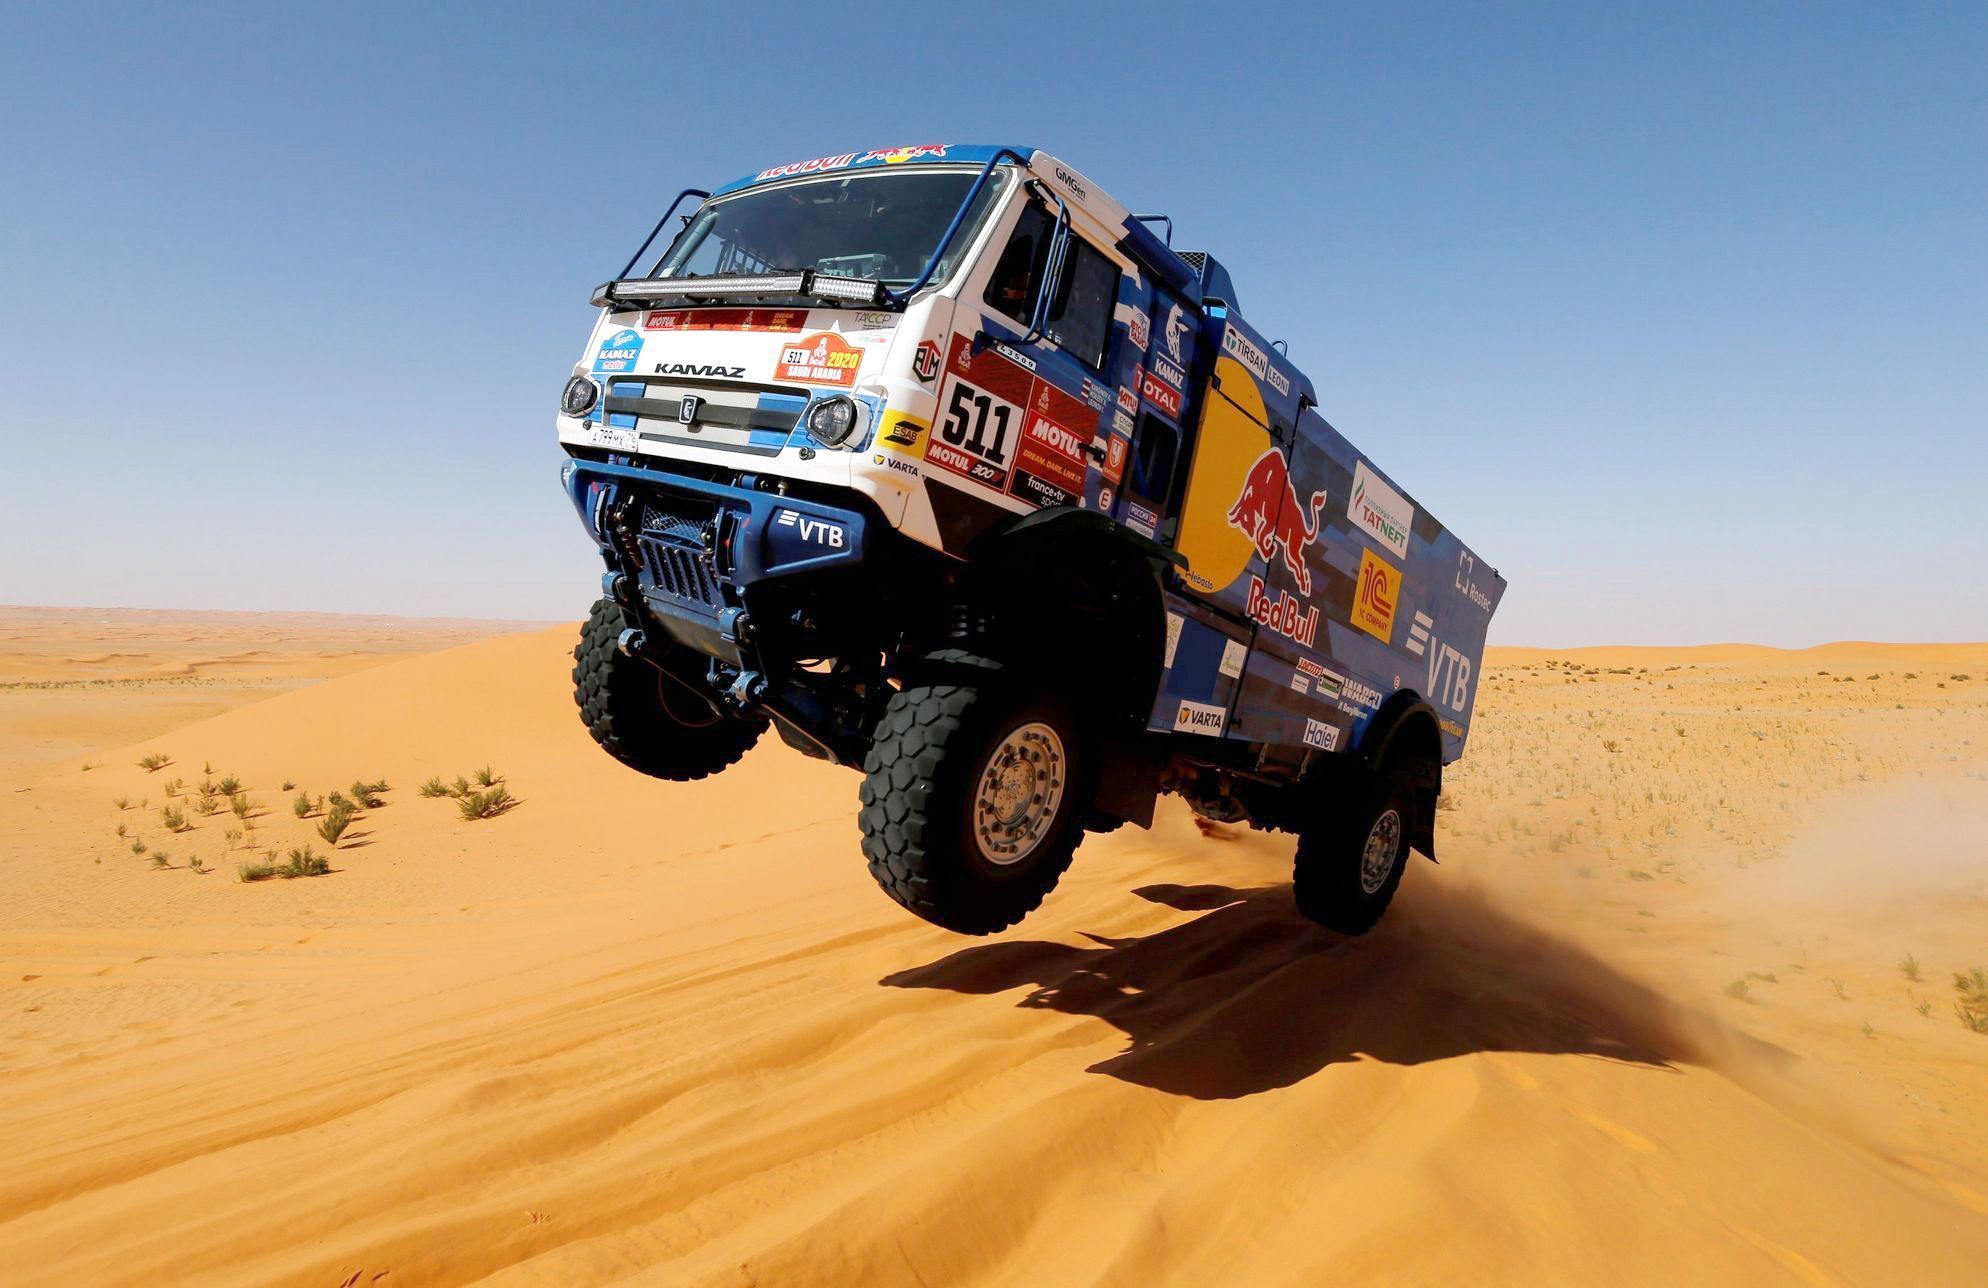 Nejhezčí fotky Reuters 2020 - Andrej Karginov v Kamazu při Rallye Dakar